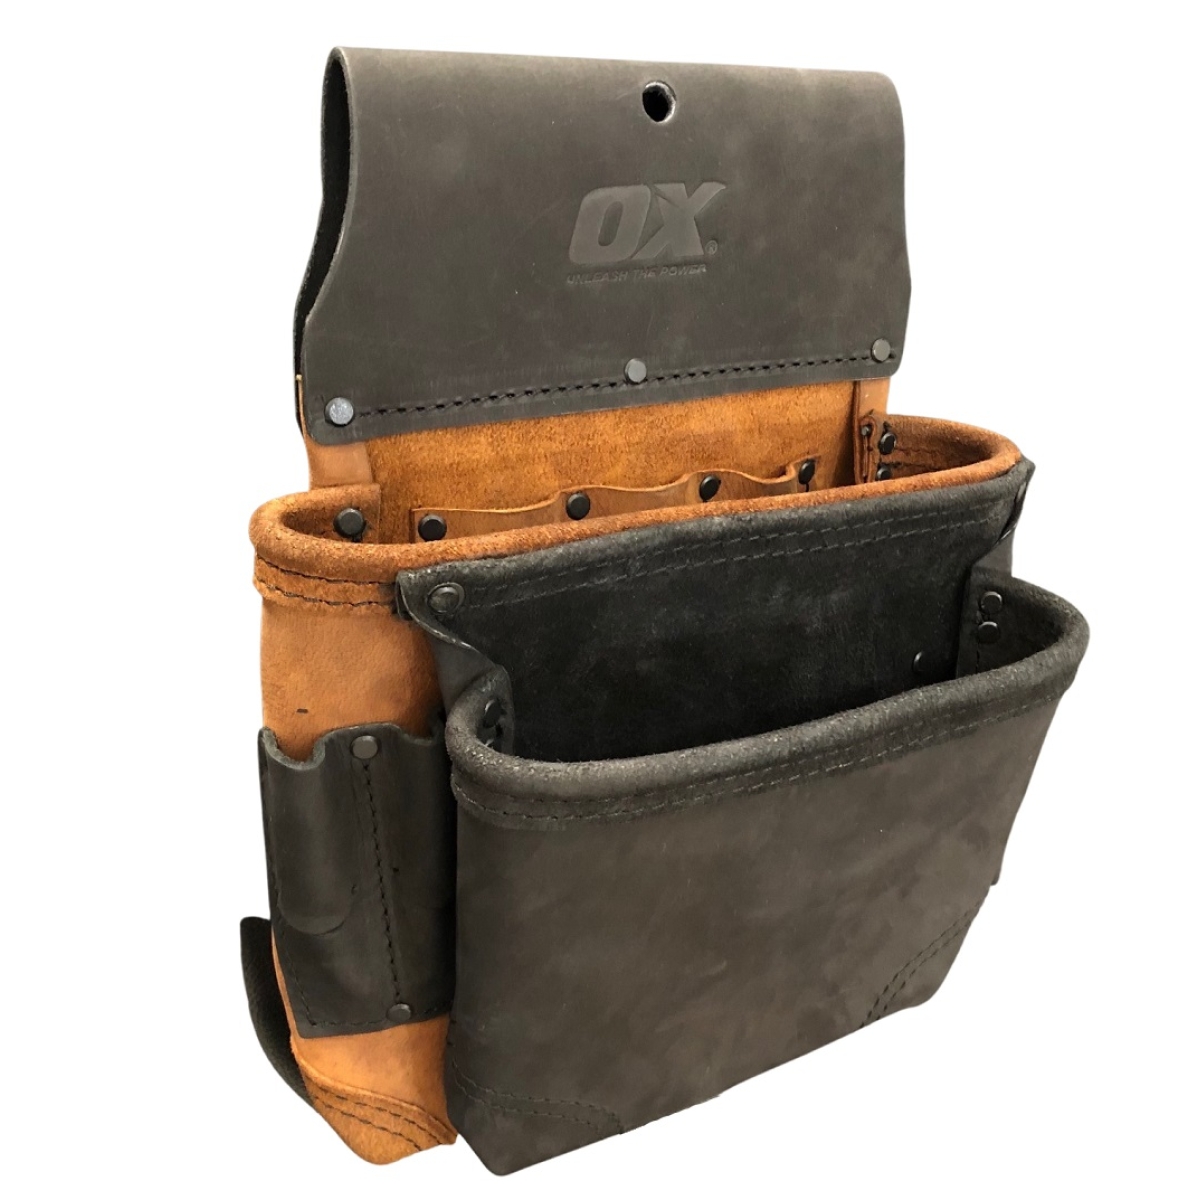 OX Pro Tan & Black Leather Tradies Pouch - 8 Pocket